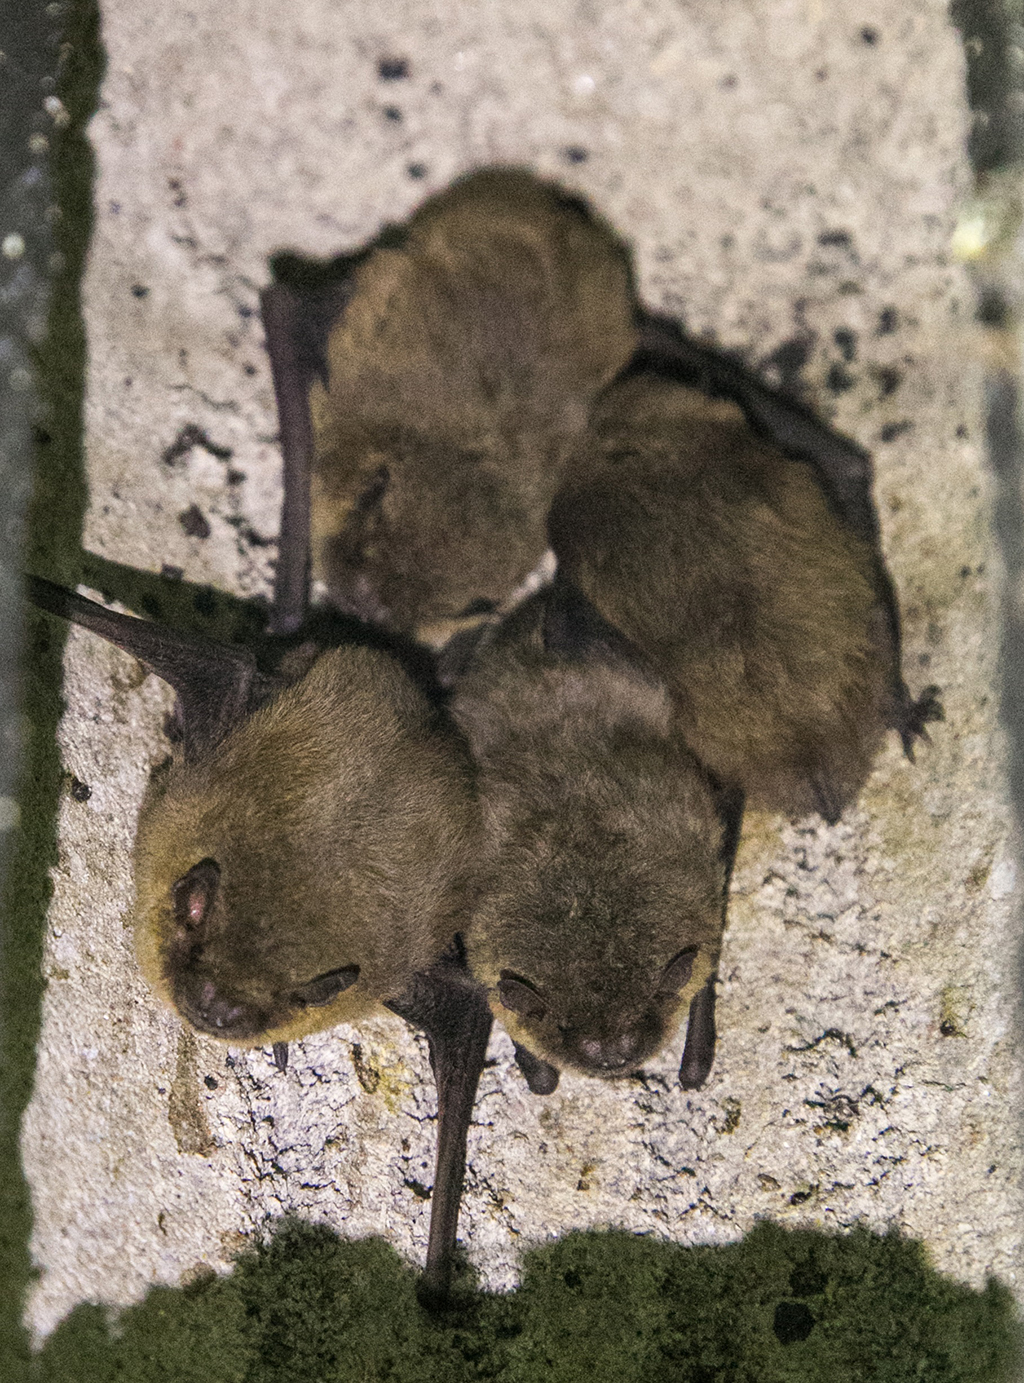 Roosting bats in a property (Photo: Michal Ostalowski)